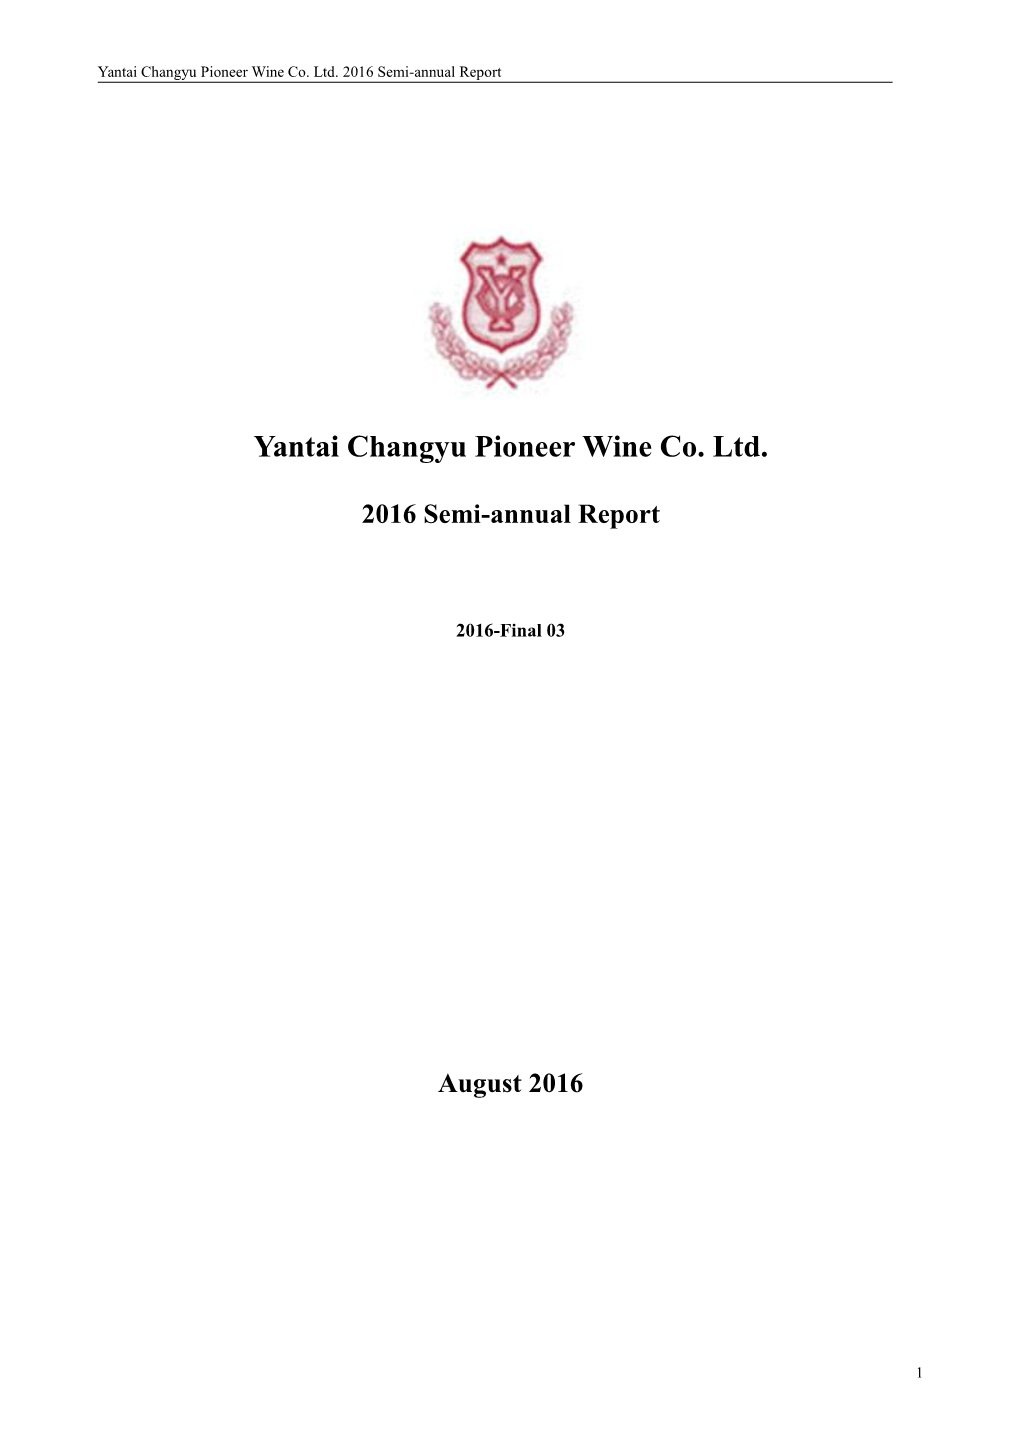 Yantai Changyu Pioneer Wine Co. Ltd. 2016 Semi-Annual Report